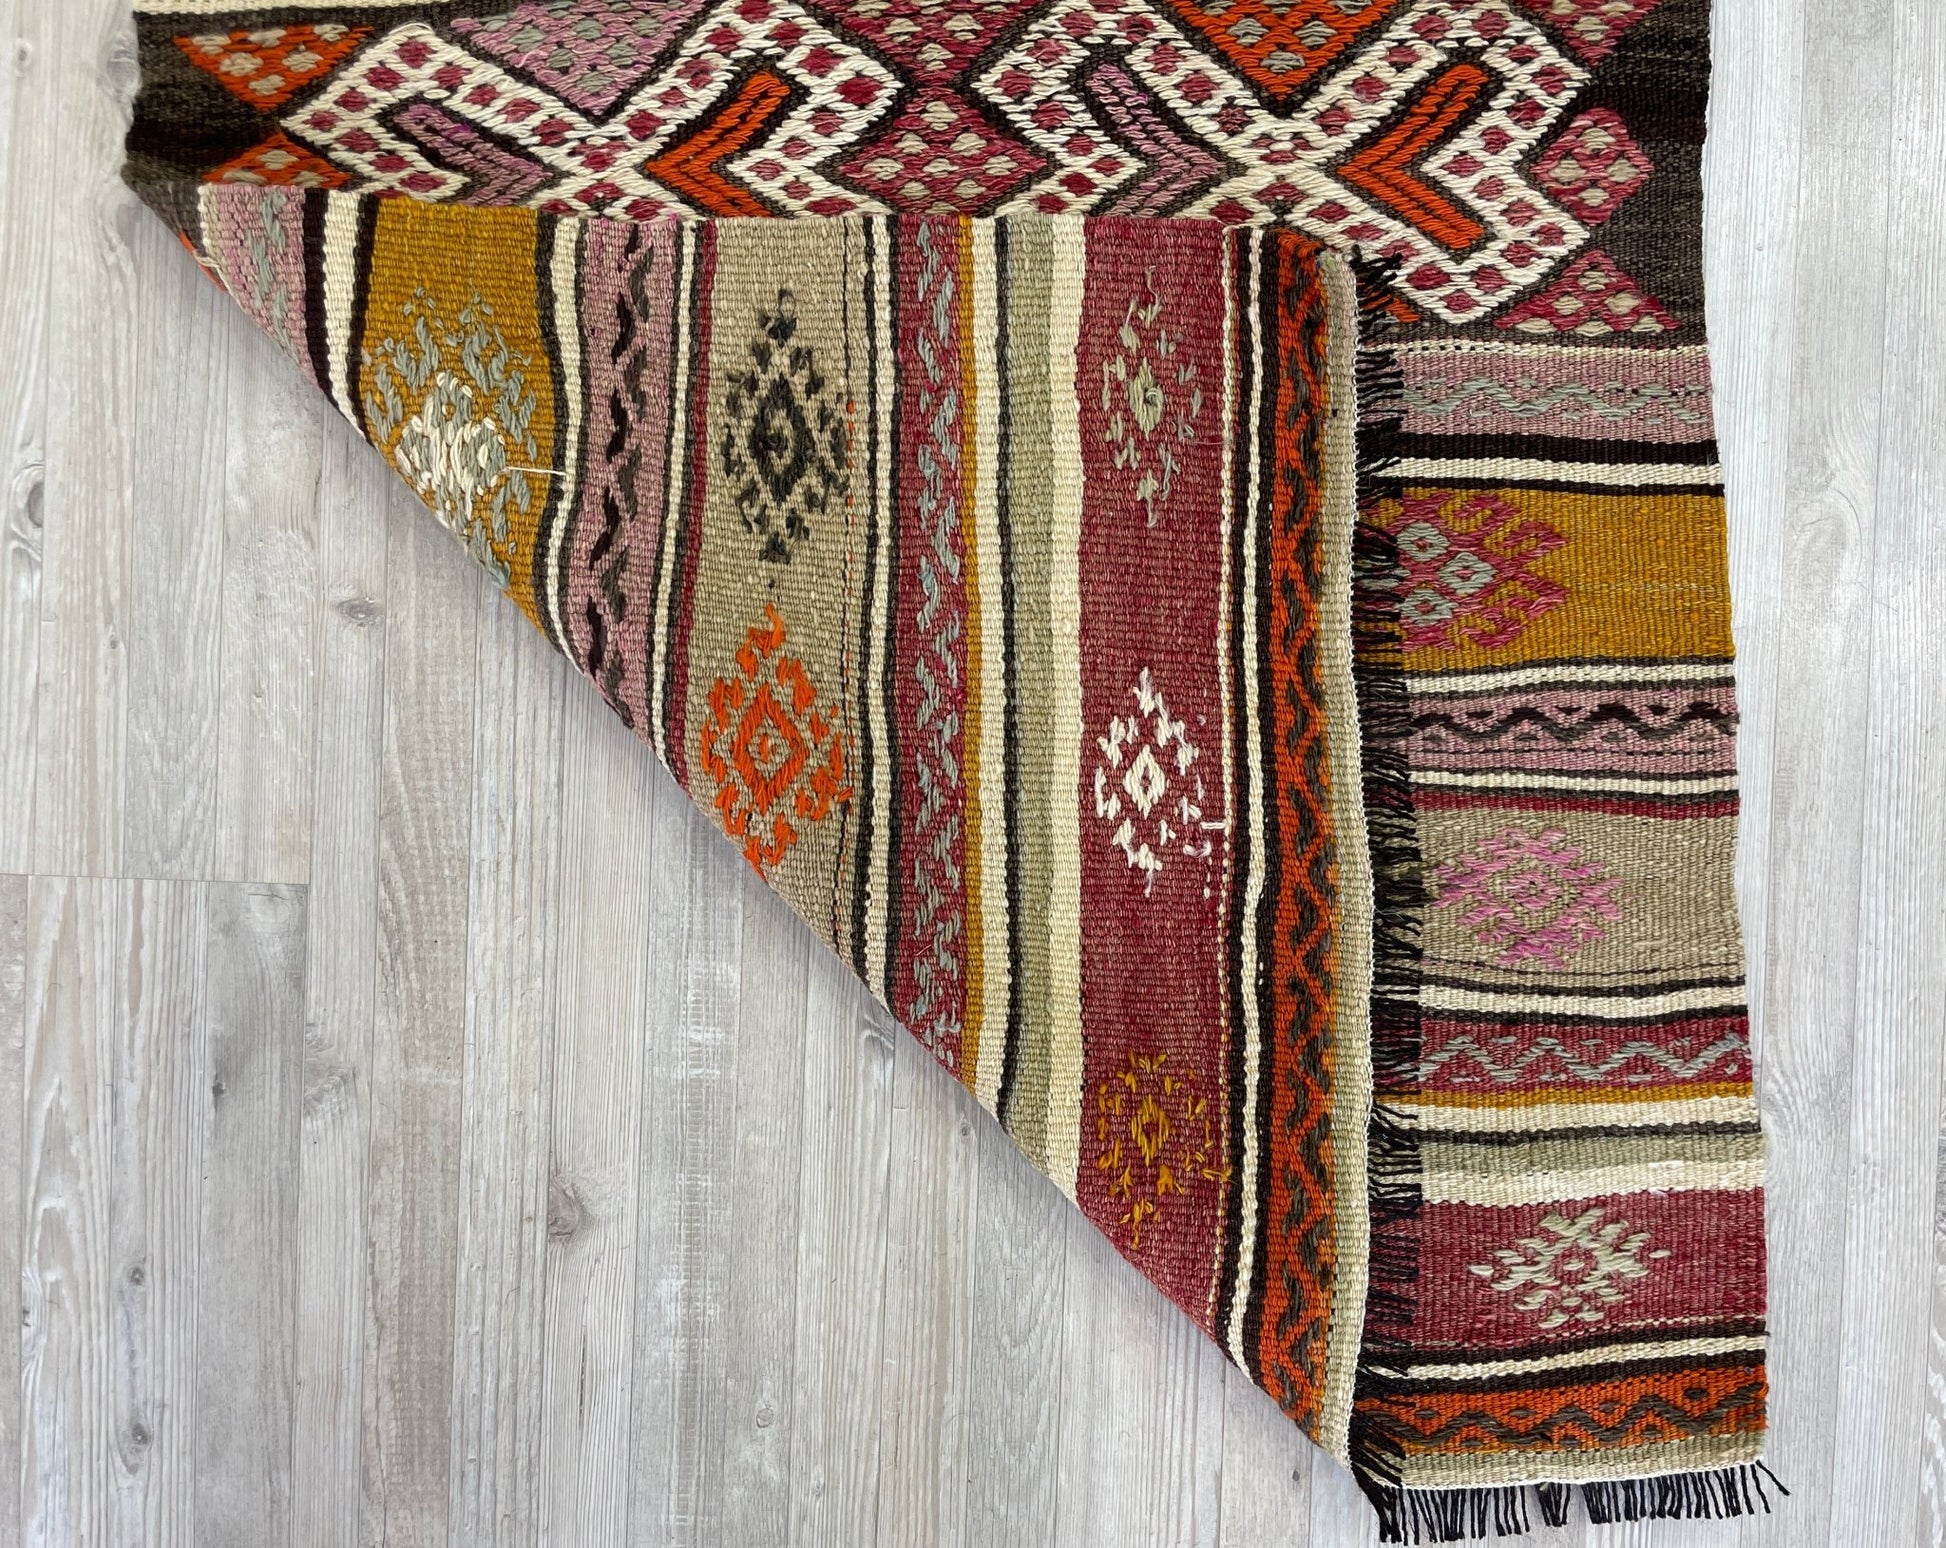 kars turkish kilim rug shop palo alto. Rug shop san francisco bay area vintage rug berkeley